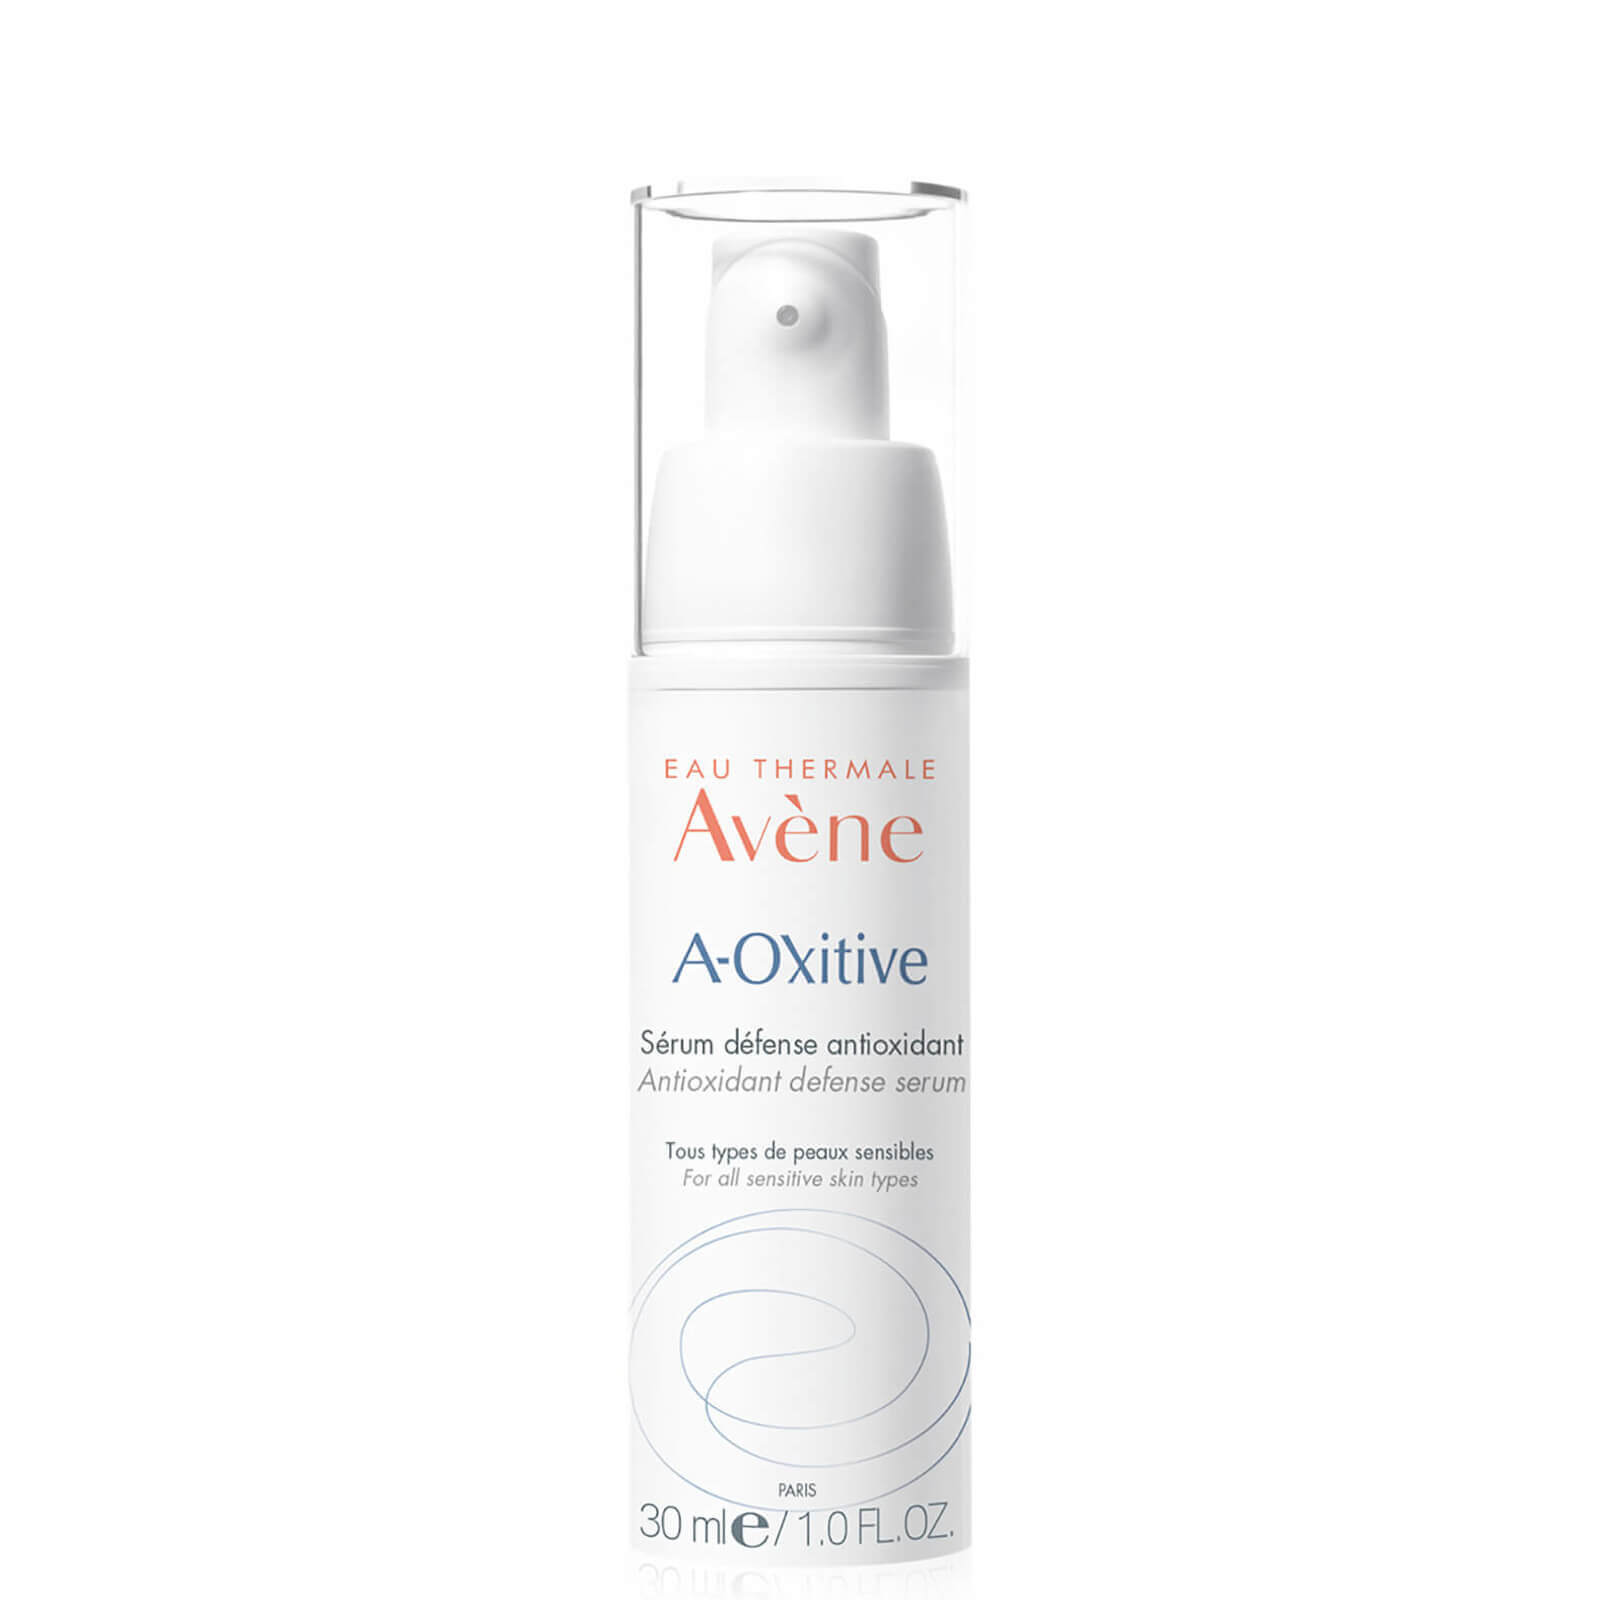 Avene A-oxitive Antioxidant Defense Serum 1.0 Fl. oz